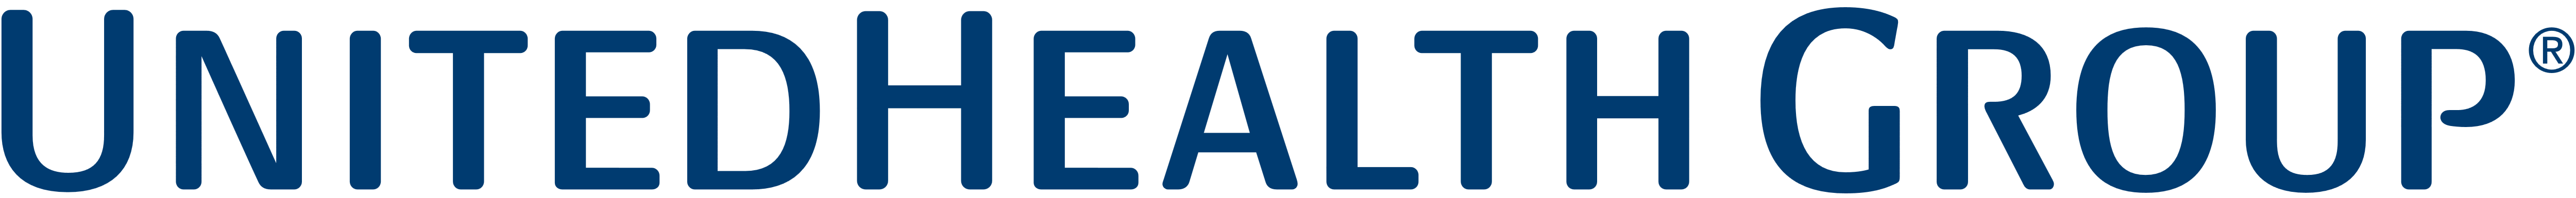 UnitedHealth Group – Logos Download